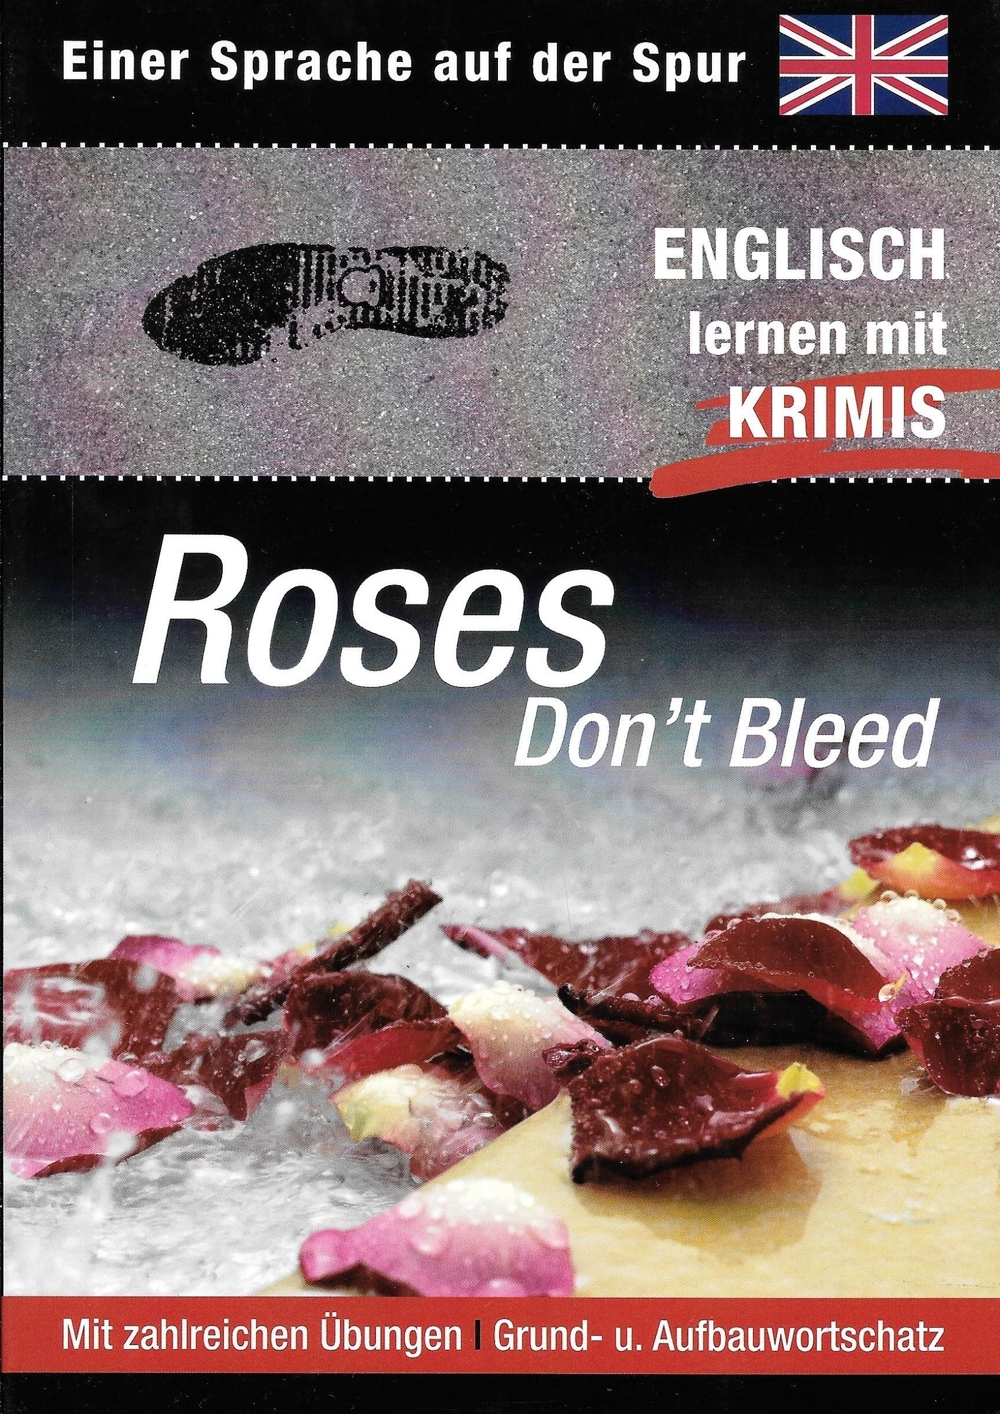 Englisch-Lern-Buch "Roses don`t bleed"